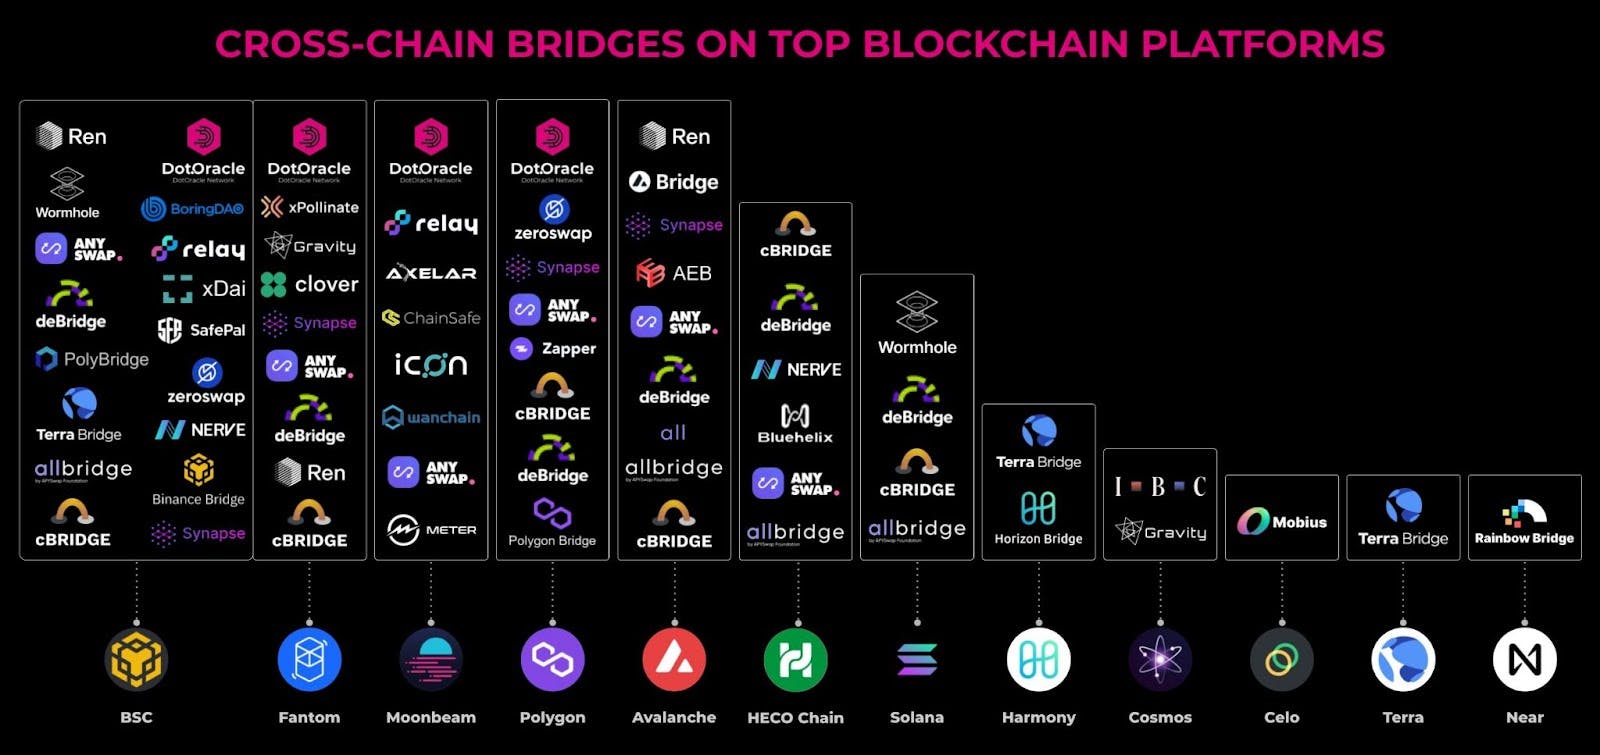 Cross-chain bridges on top blockchain platforms